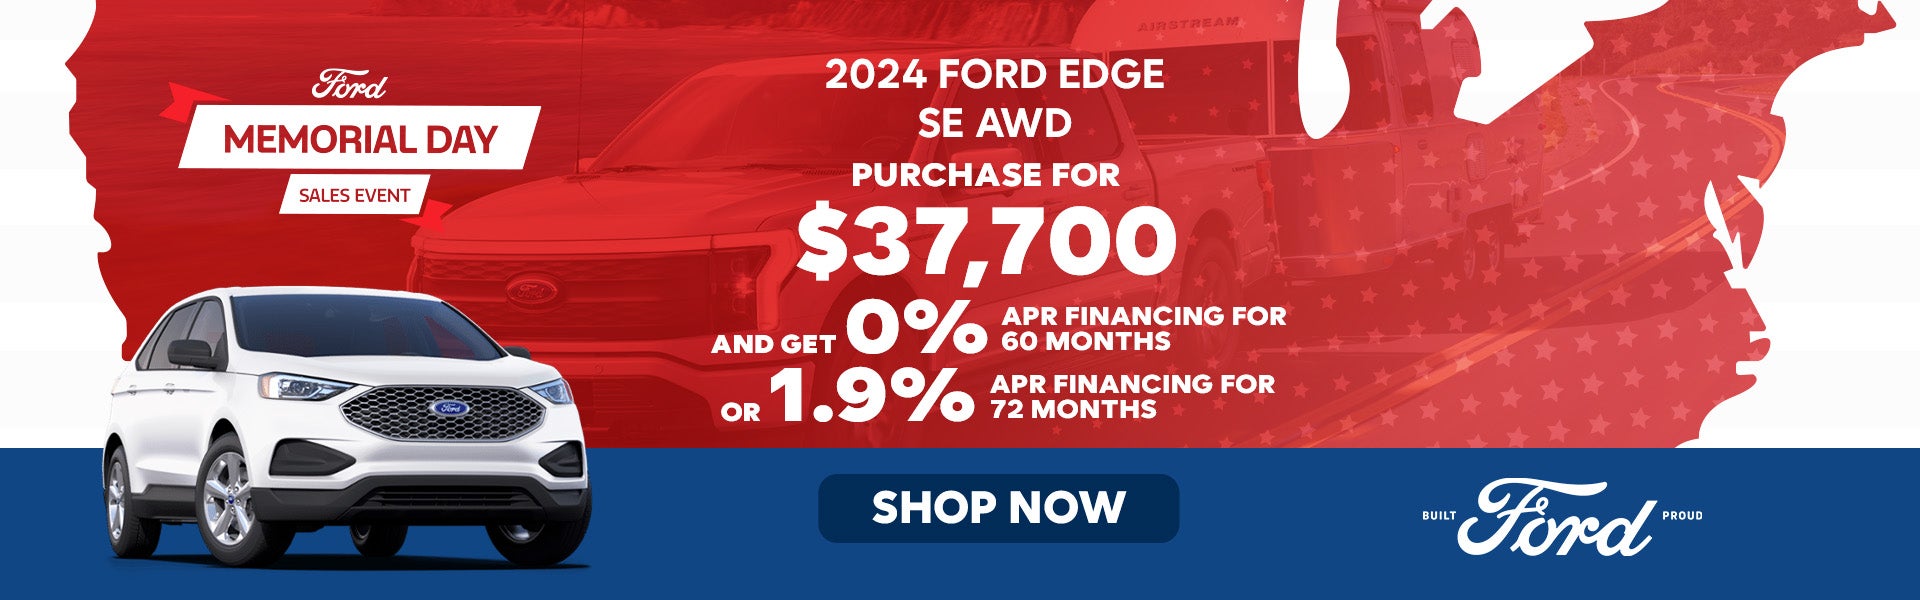 2023 Ford F-150 Lightning Special Offer